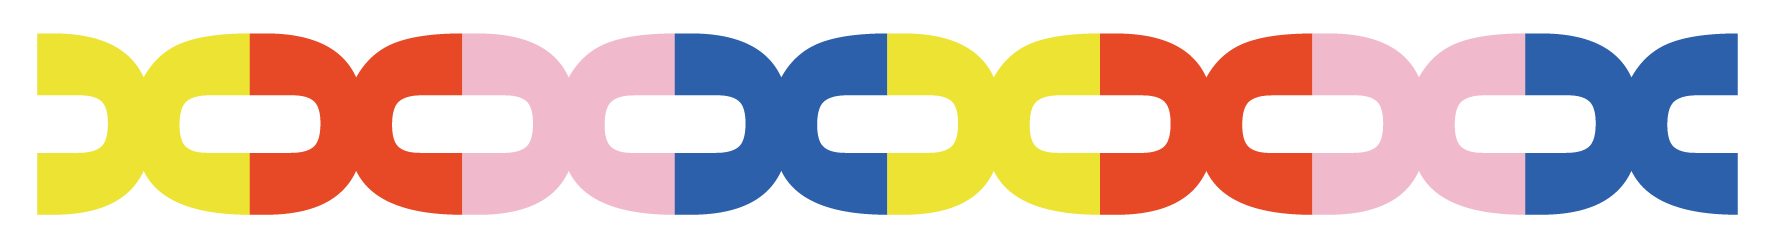 déclinaison-logo-iconographique-roxane-au-féminin-mailyskoebel